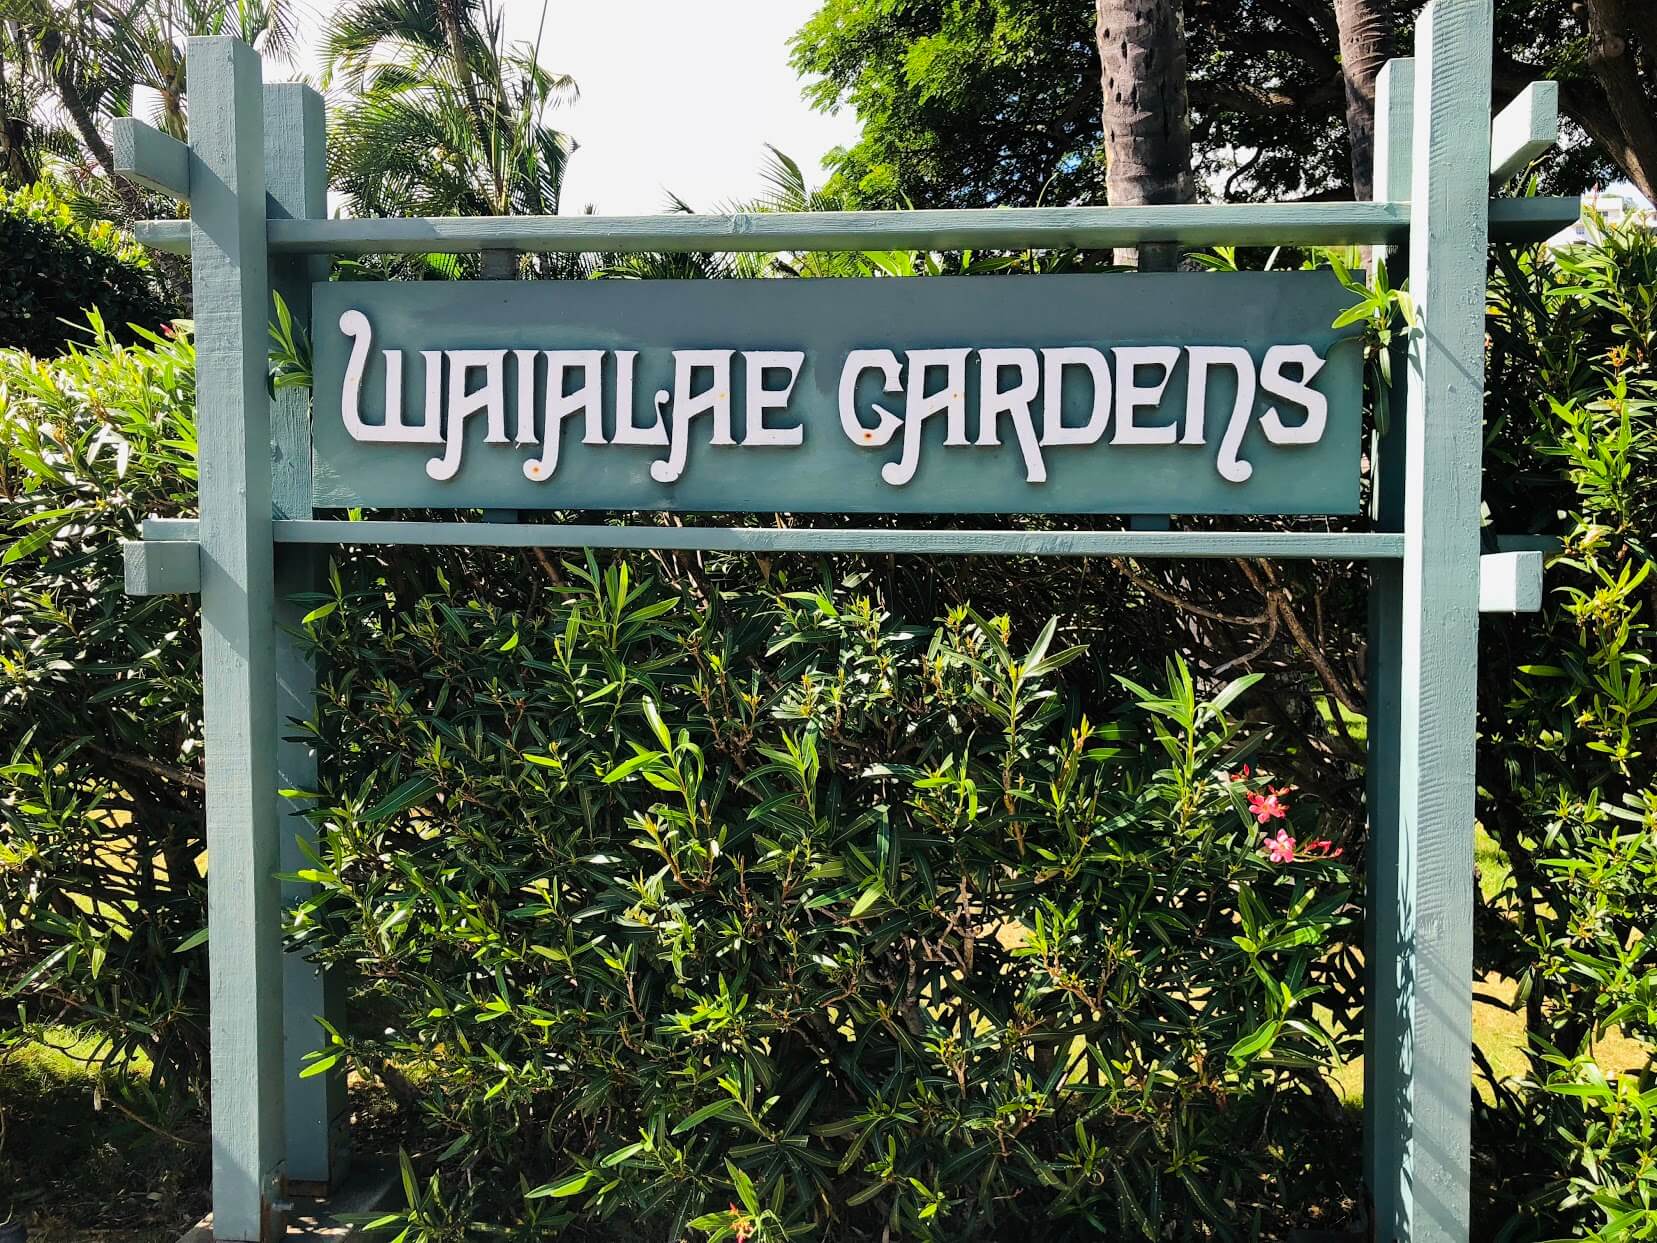 Waialae Gardensの看板